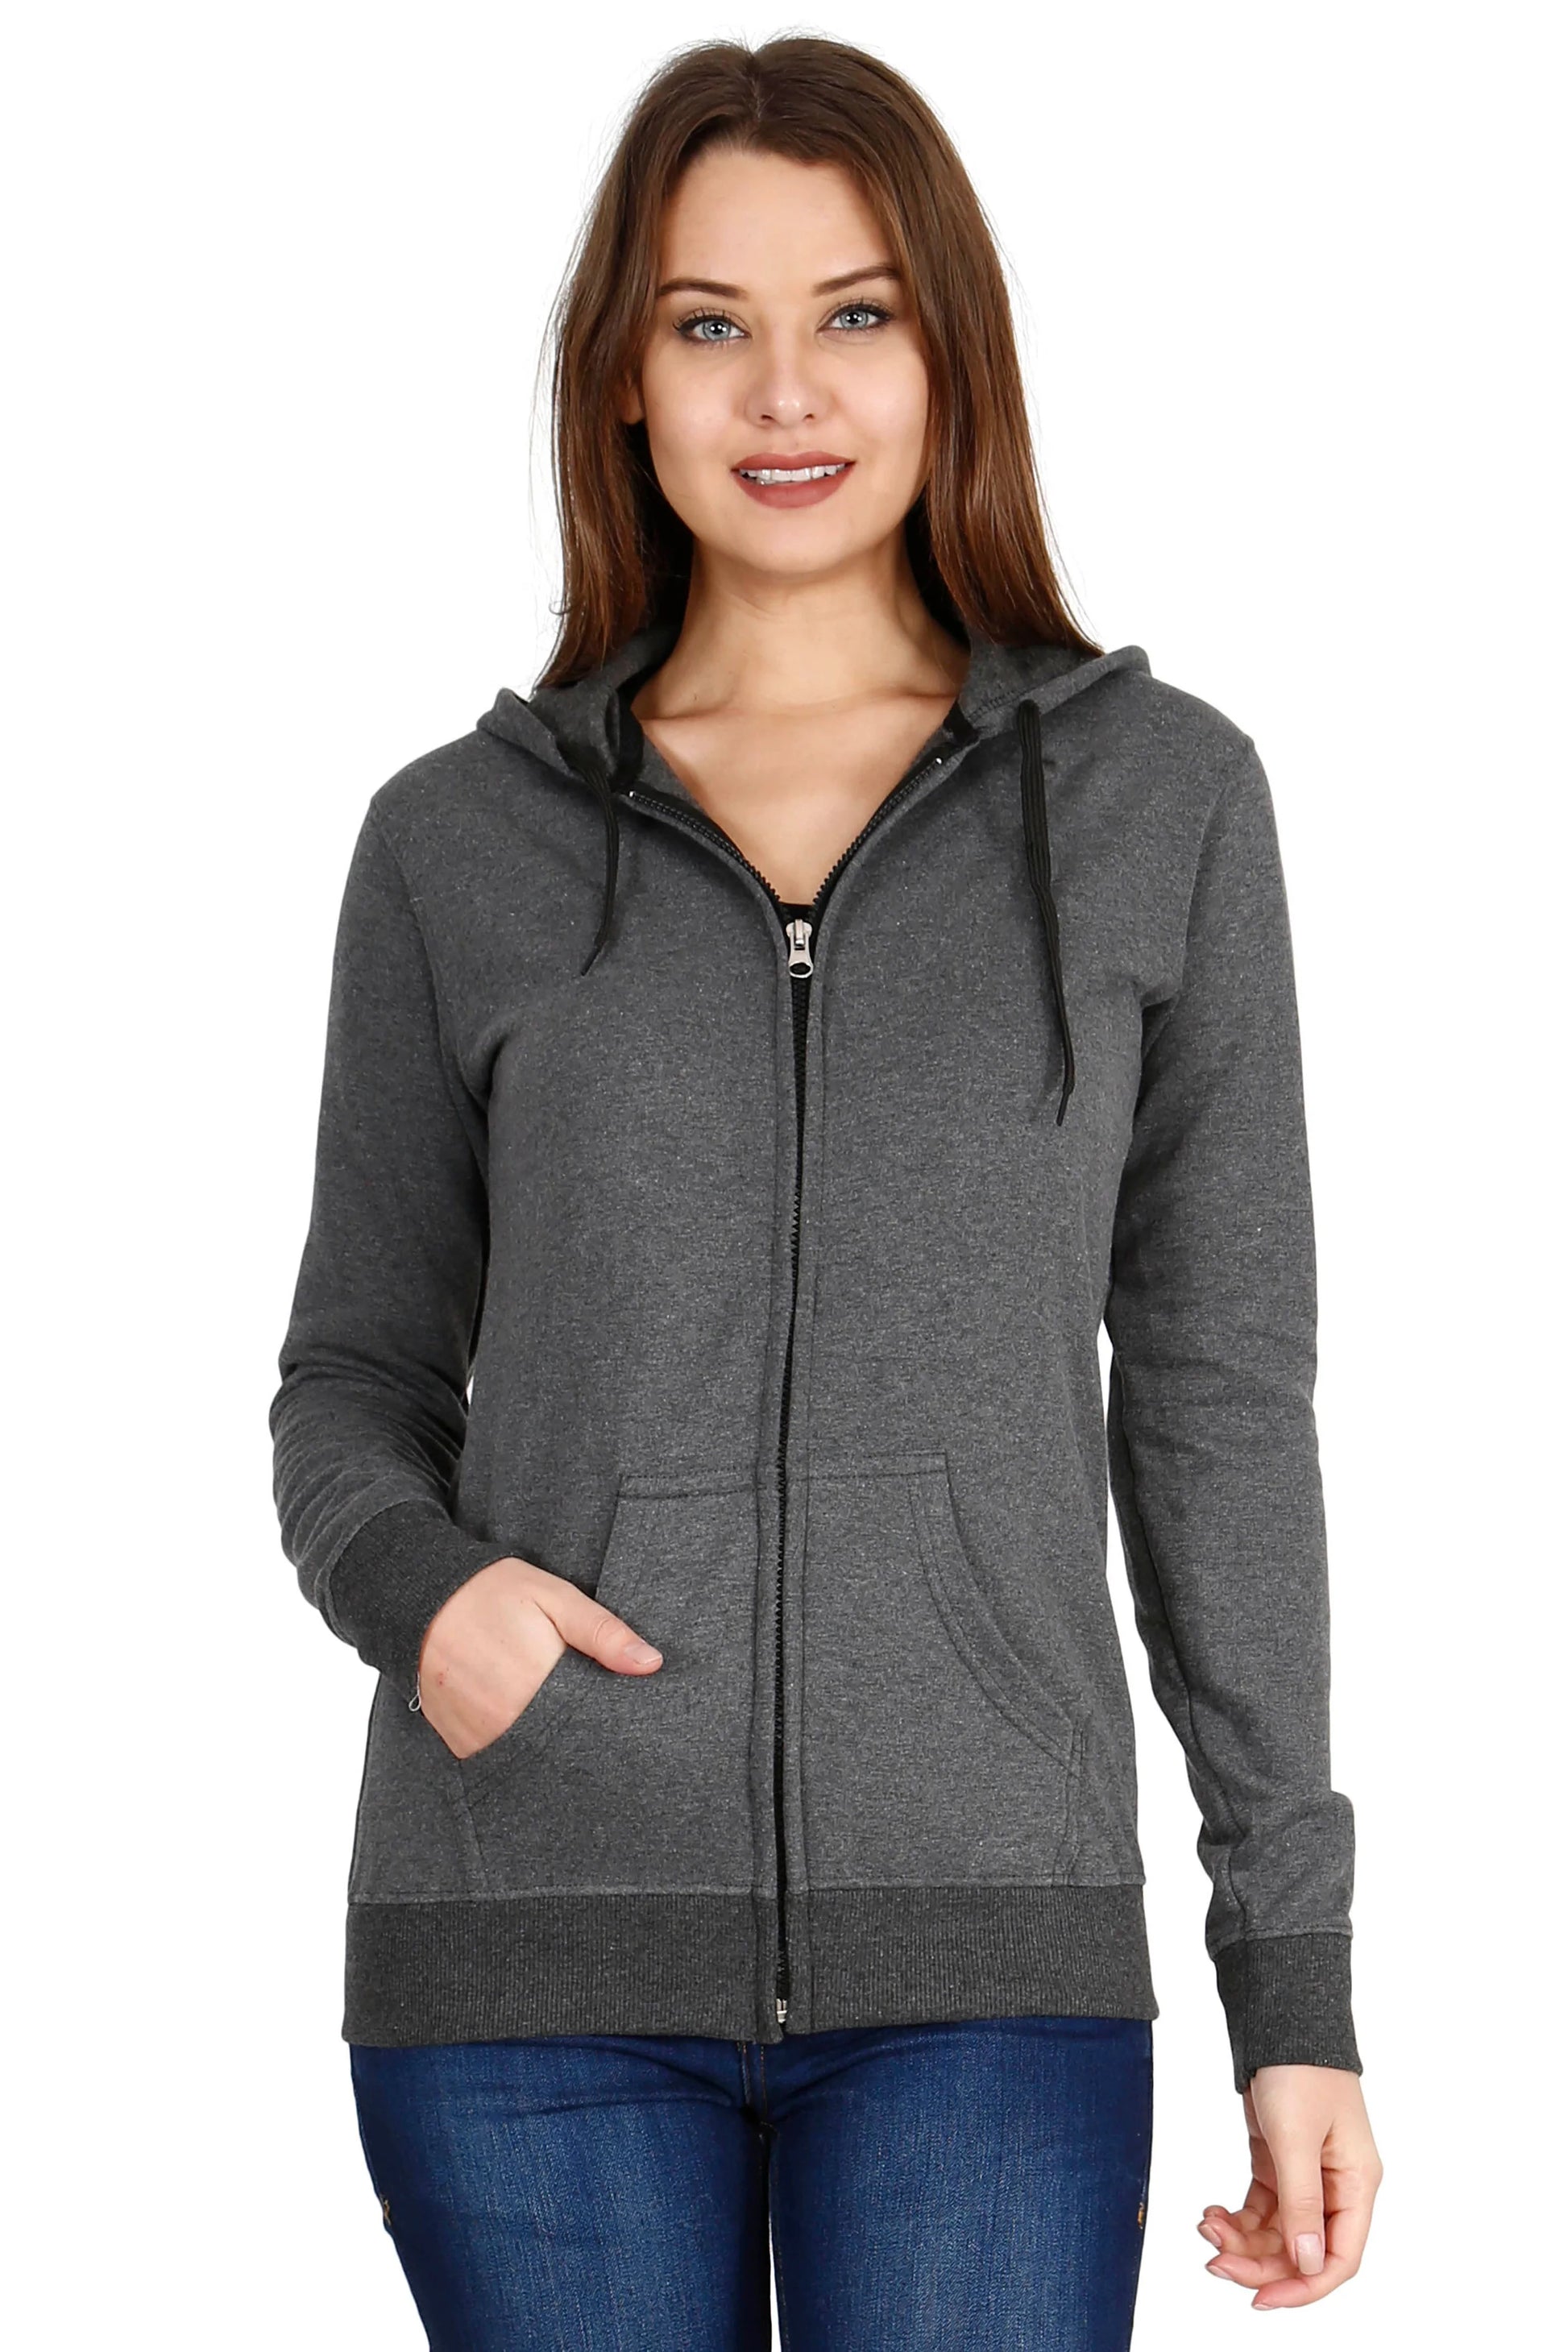 Women's Cotton Plain Full Sleeve Hoodies/Sweatshirt